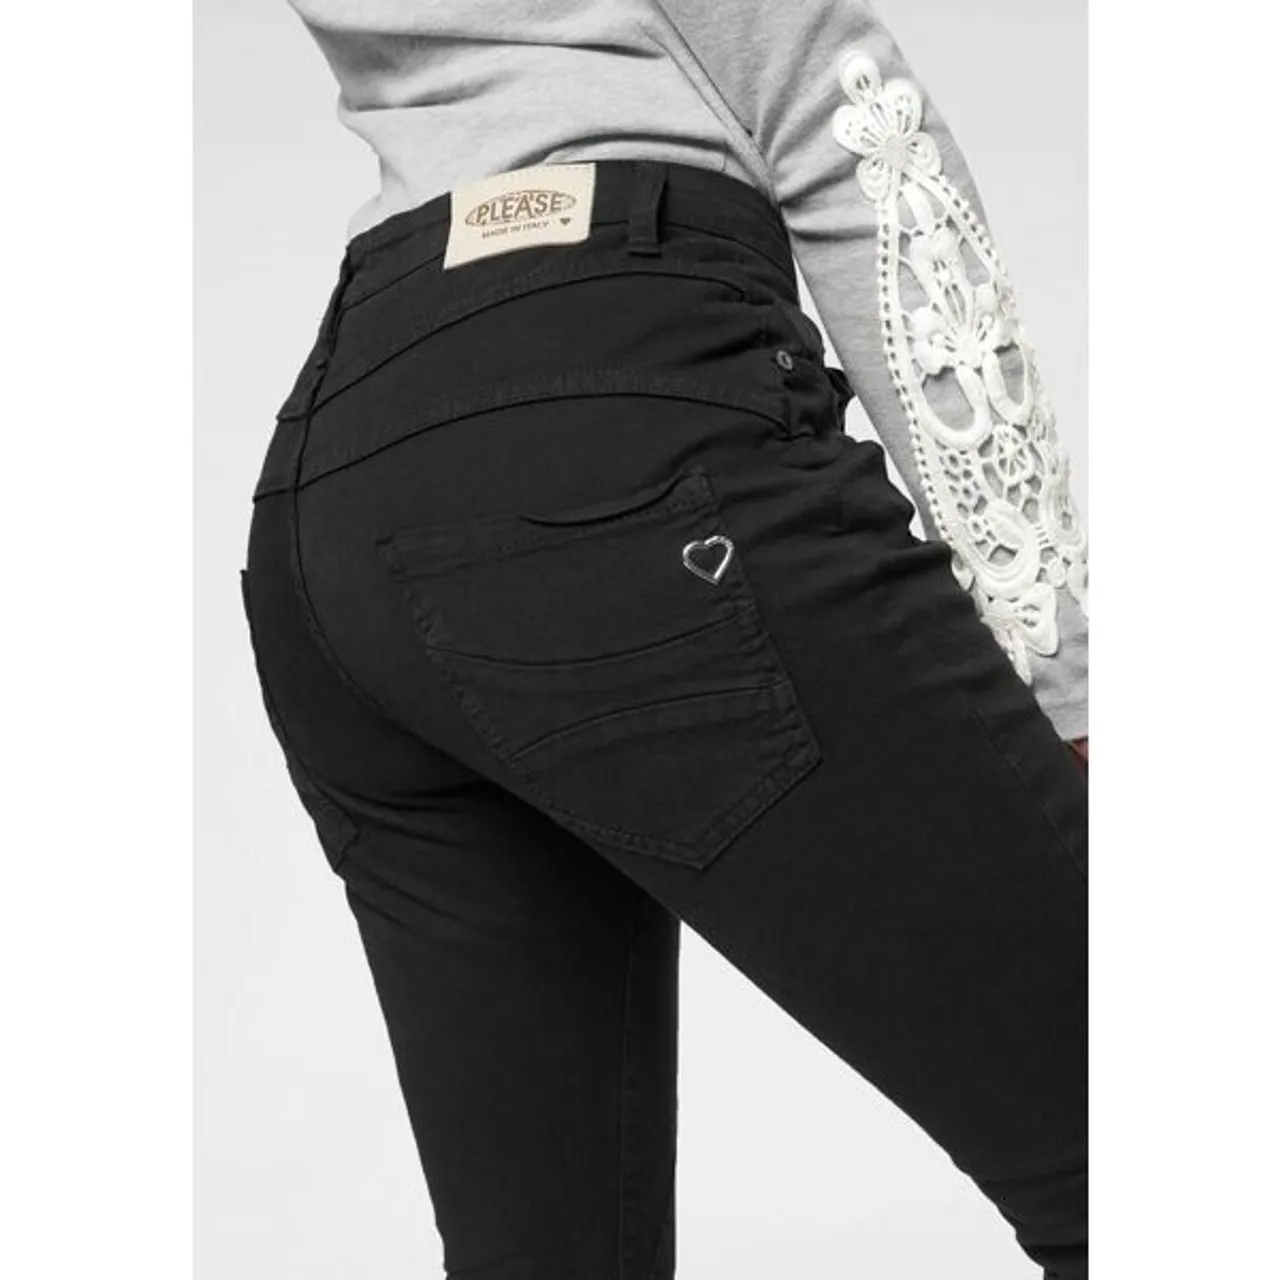 5-Pocket-Jeans PLEASE JEANS "P78A" Gr. S/36, N-Gr, schwarz (1900, nero) Damen Jeans Röhrenjeans